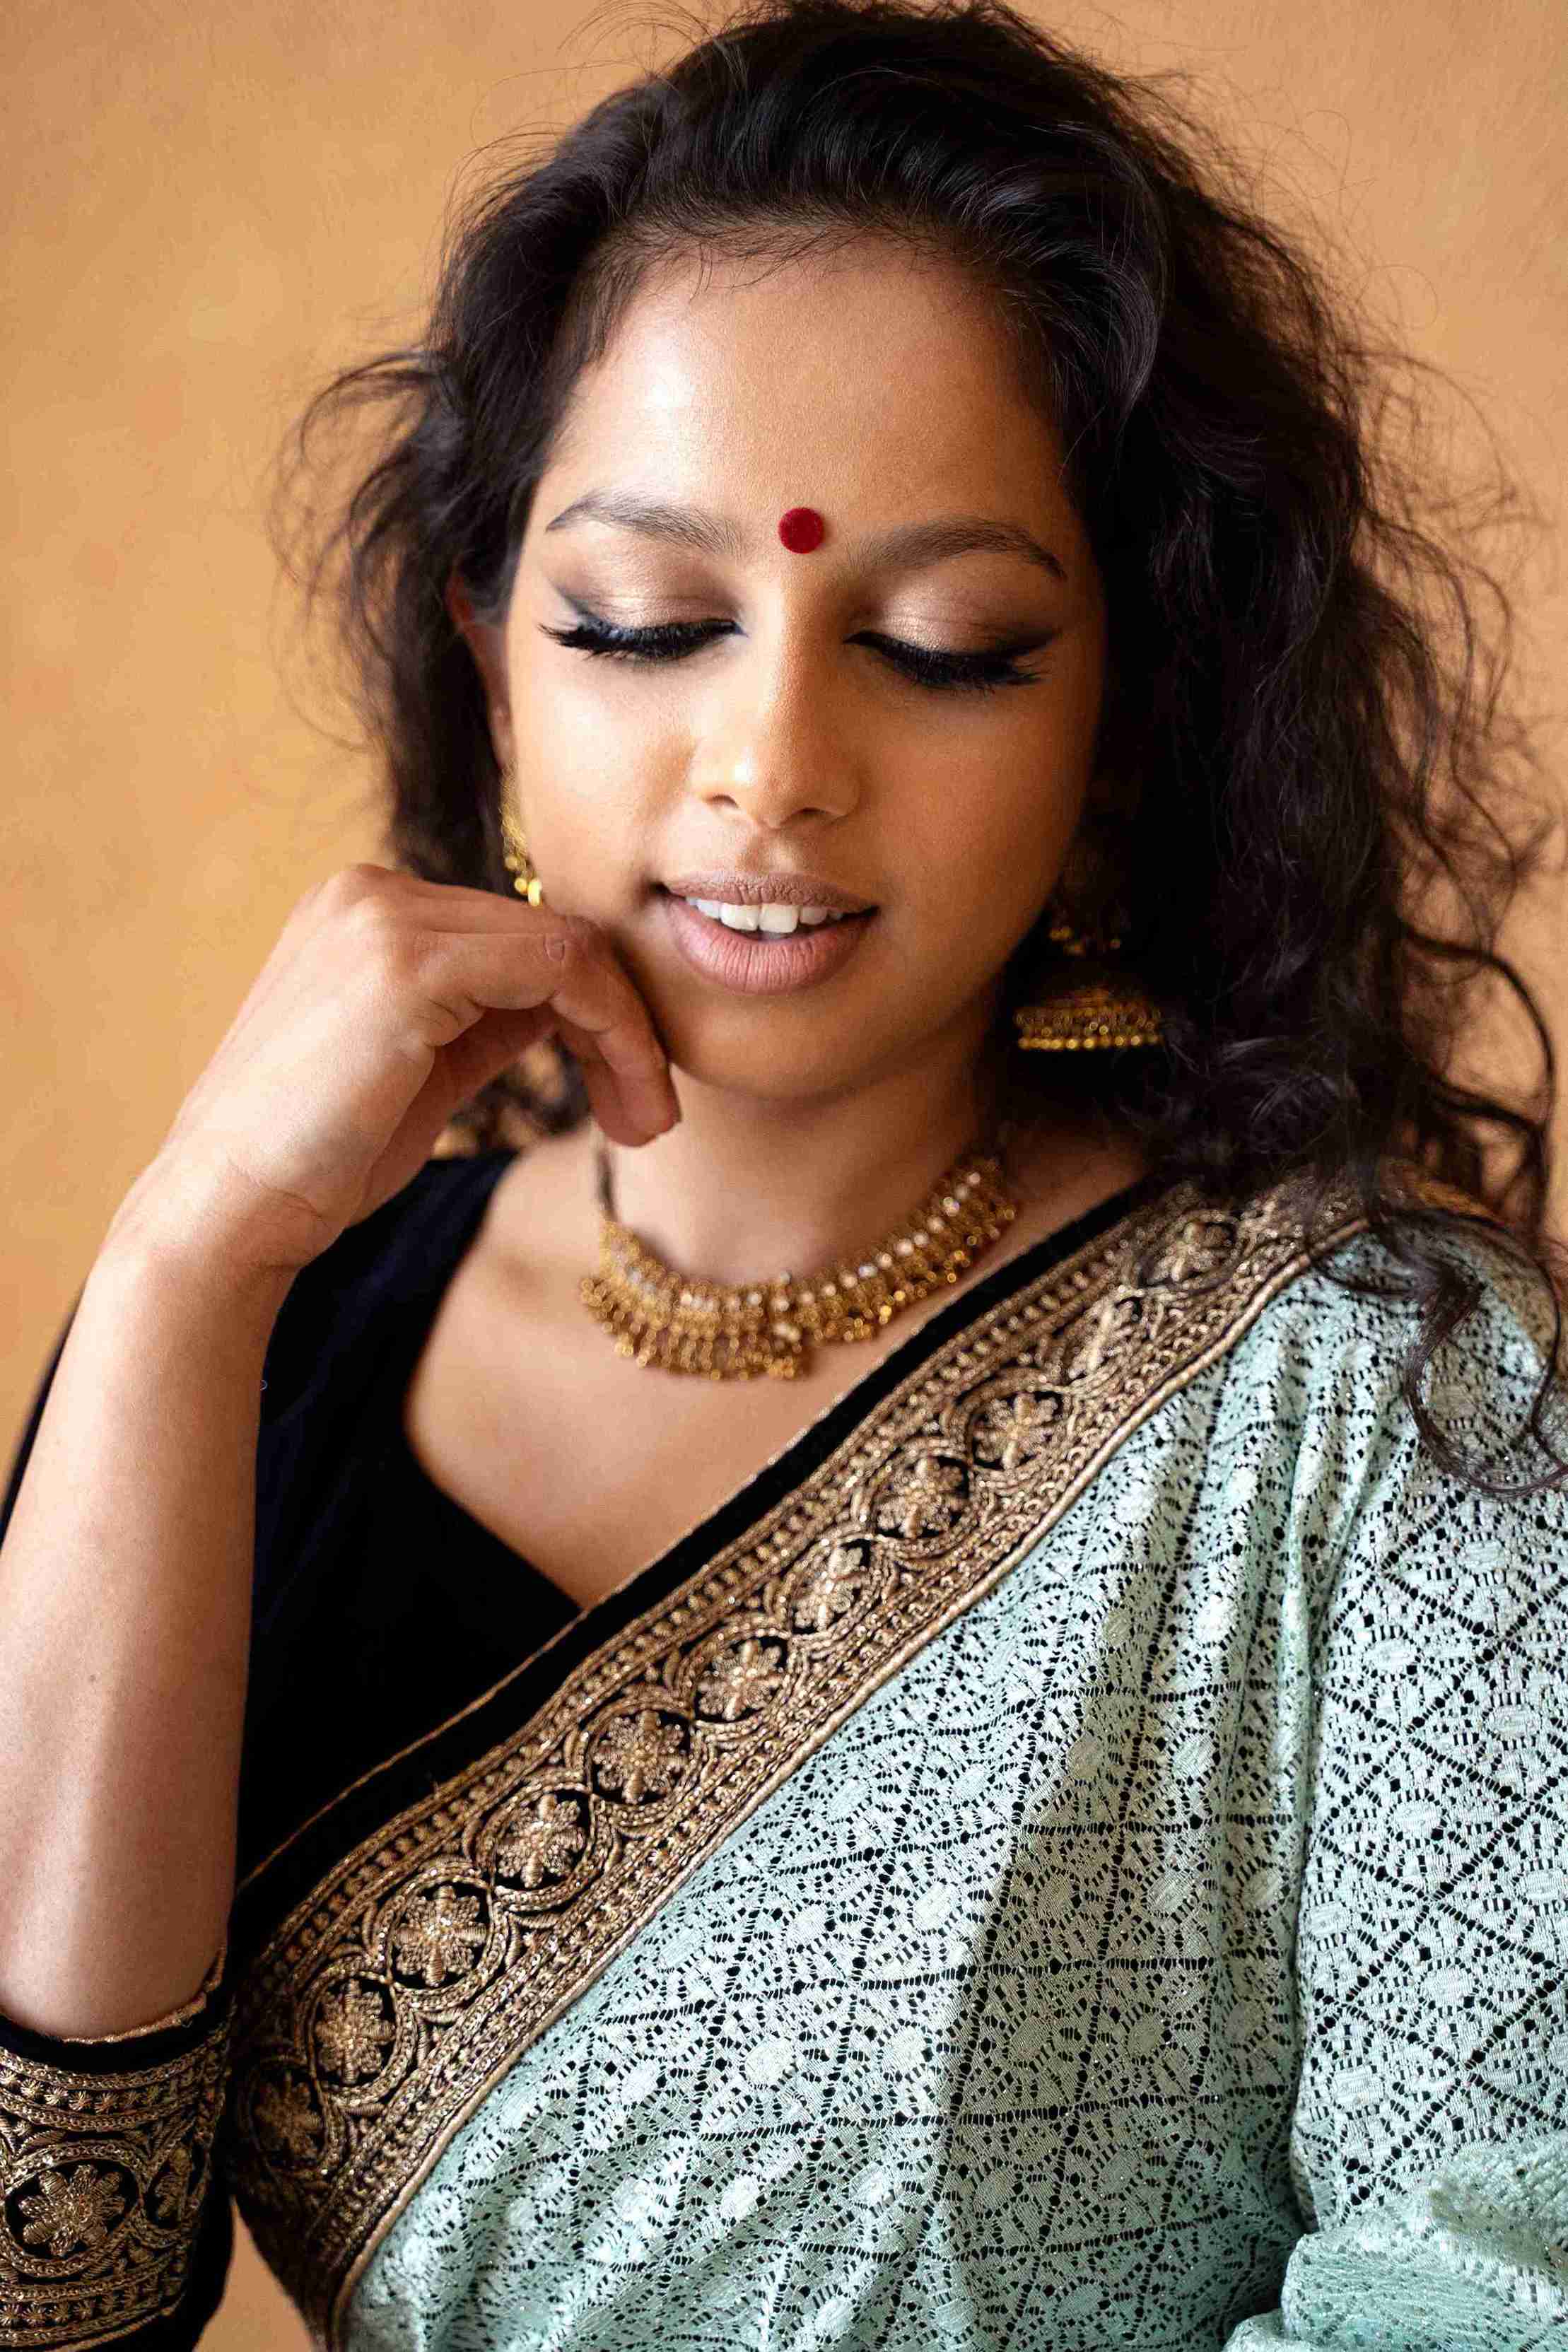 young-indian-woman-wearing-sari (1)_11zon.jpg__PID:a6923188-550b-4c5d-aaad-593f4f335cfb